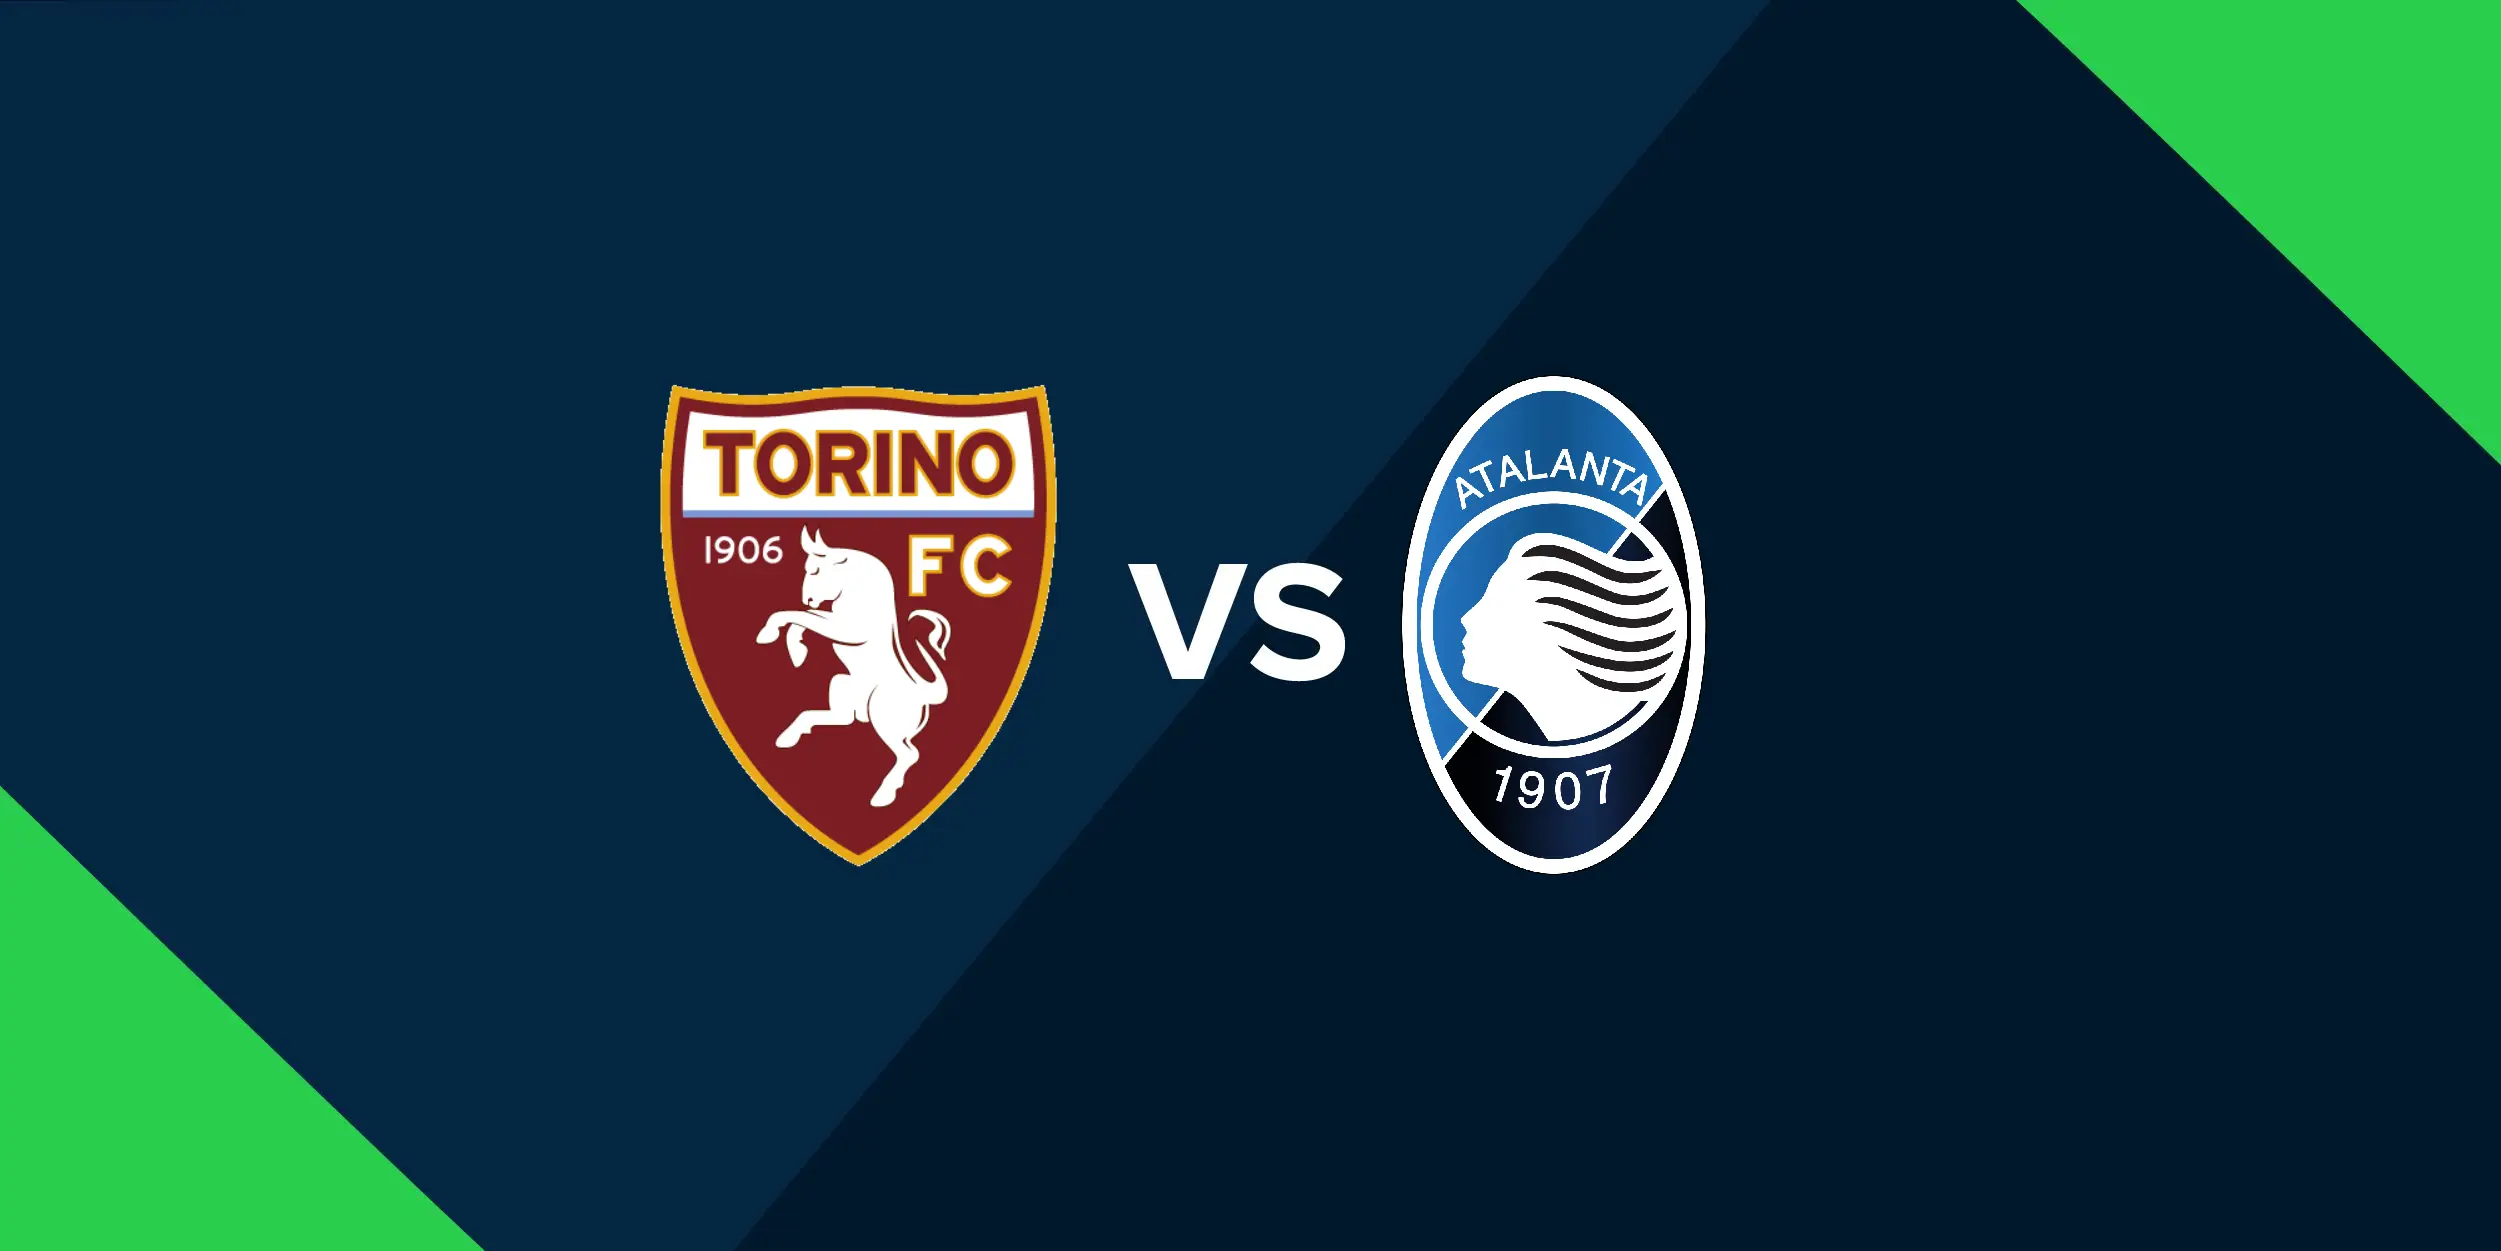 Palpite: Torino x Atalanta – Campeonato Italiano (Série A) – 4/12/2023